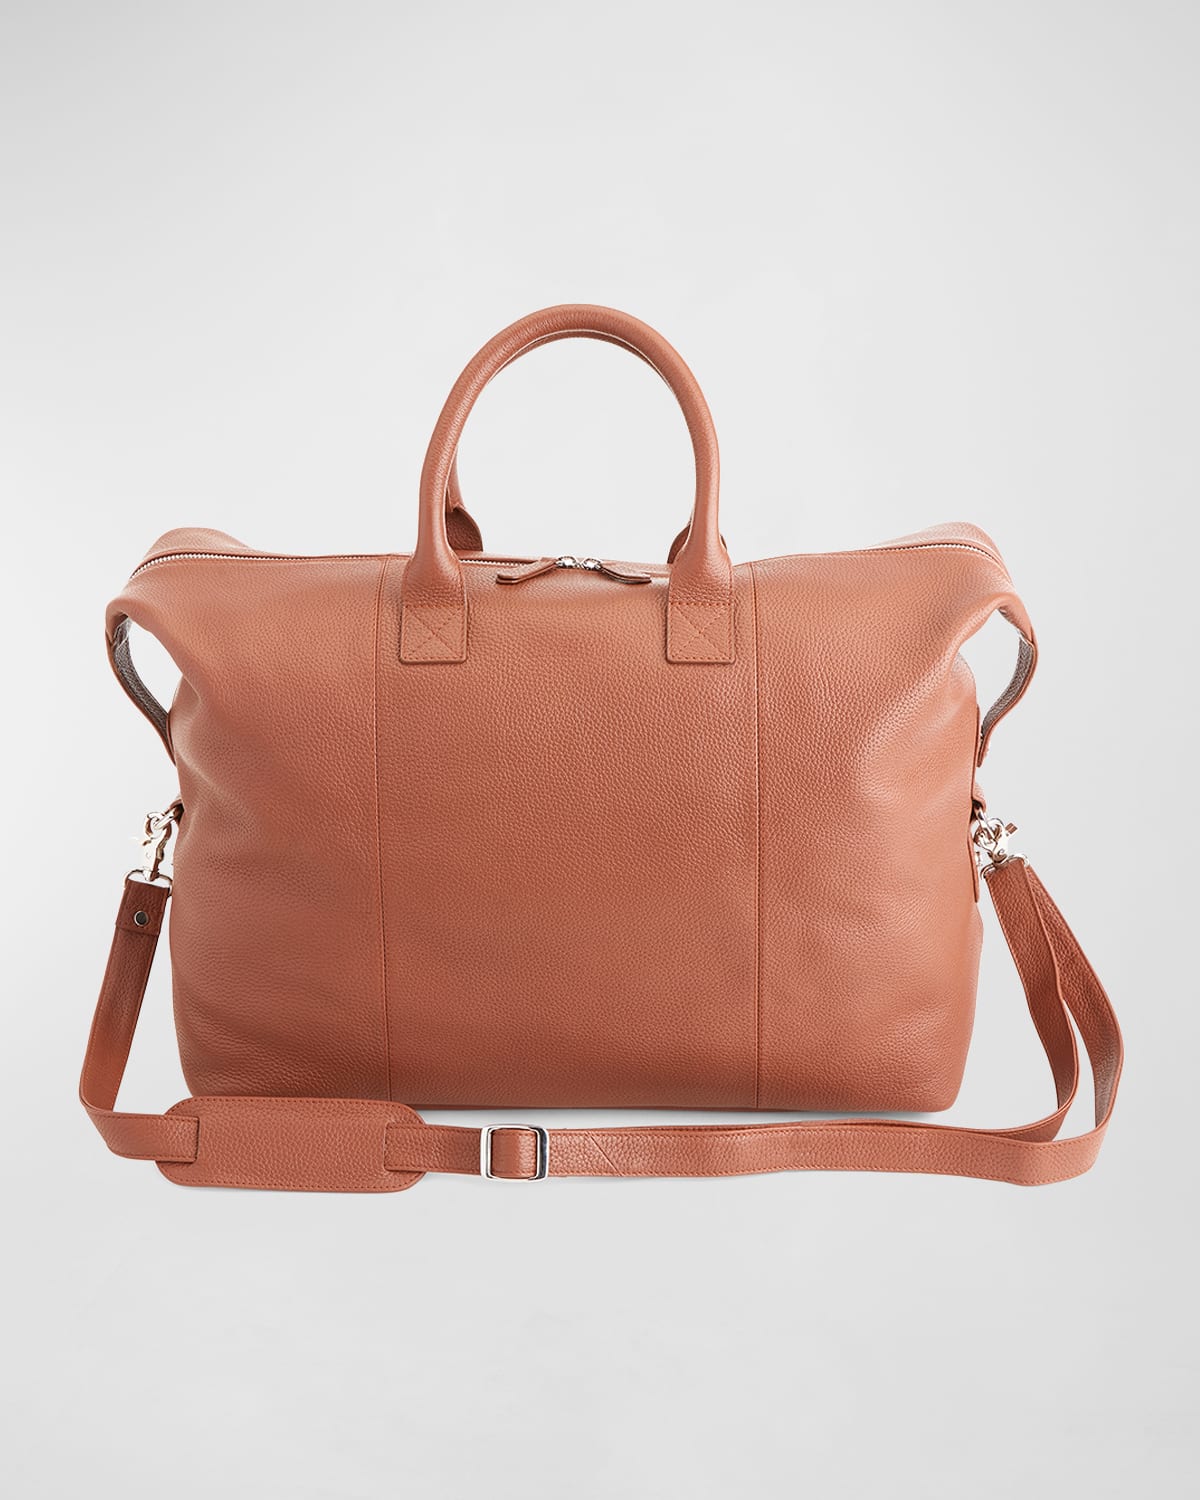 Royce New York Personalized Medium Executive Leather Duffel Bag In Tan